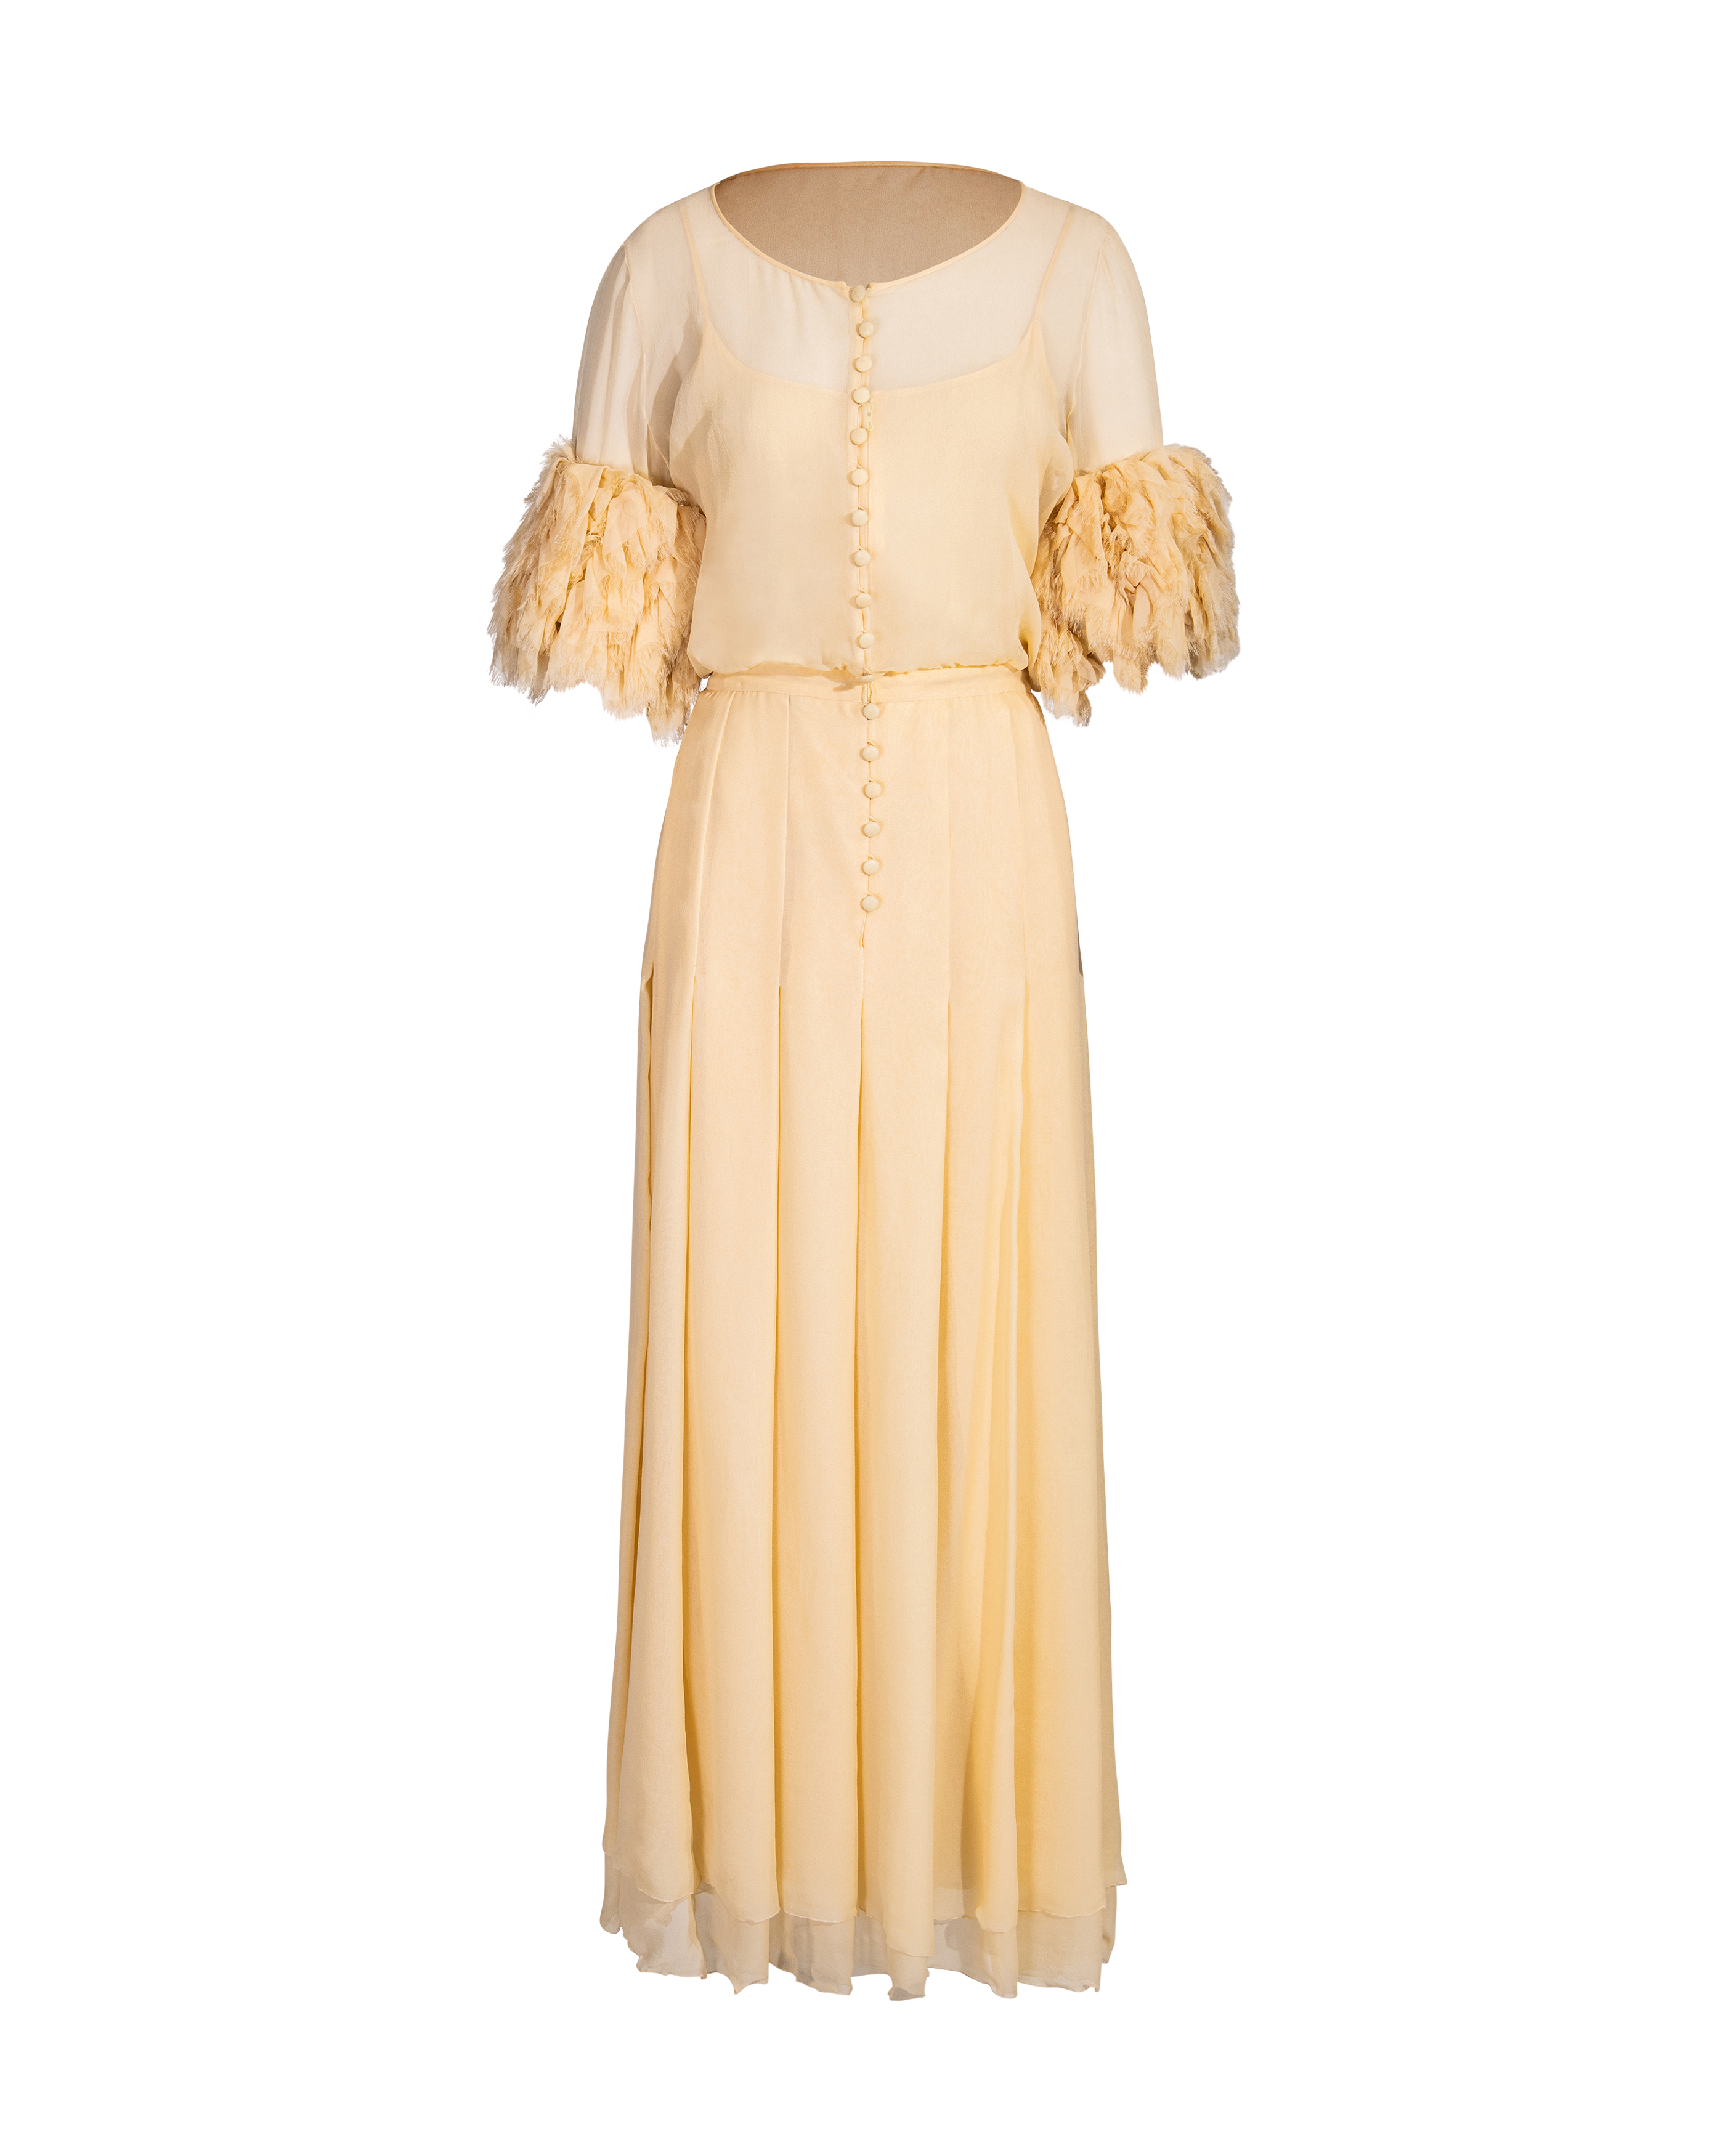 S/S 1984 Butter Yellow Silk Chiffon Gown